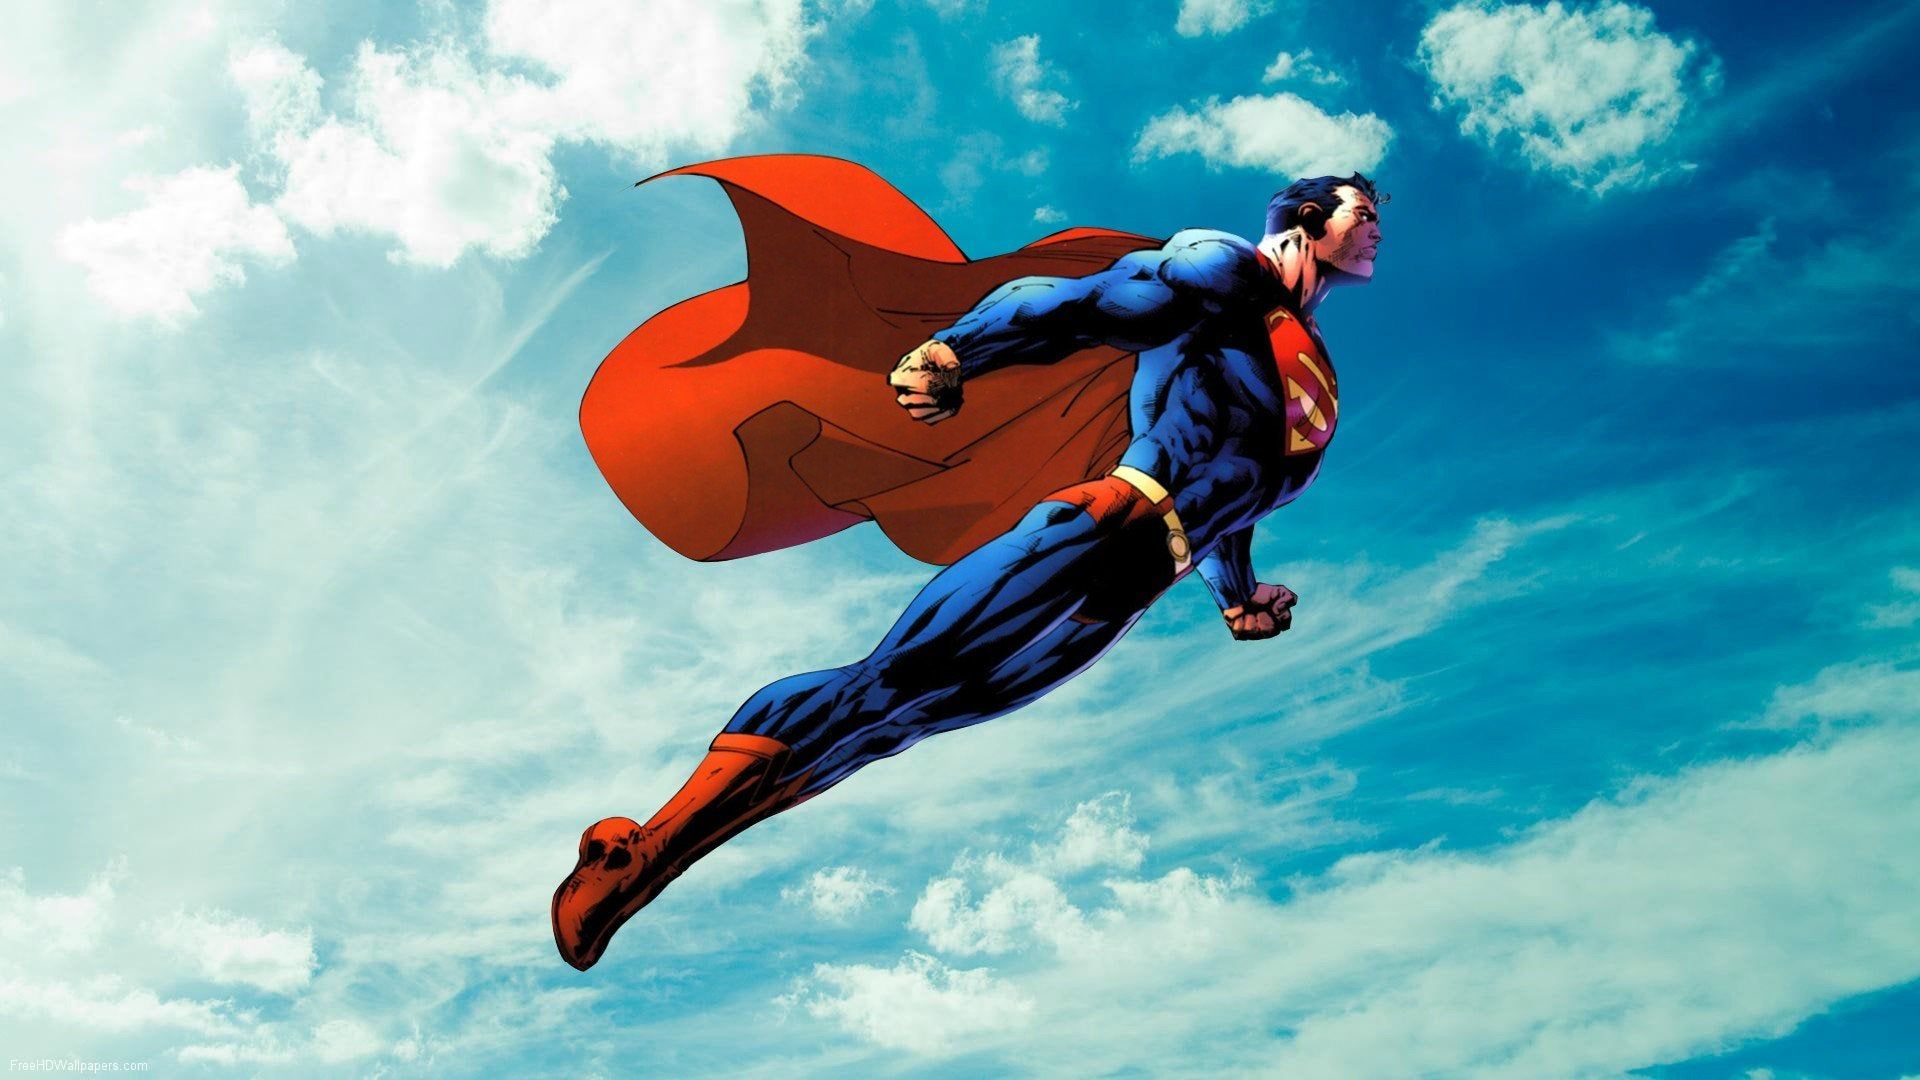 OC] Fondo de pantalla de Superman que hice con fondo realista [1920 x 1080